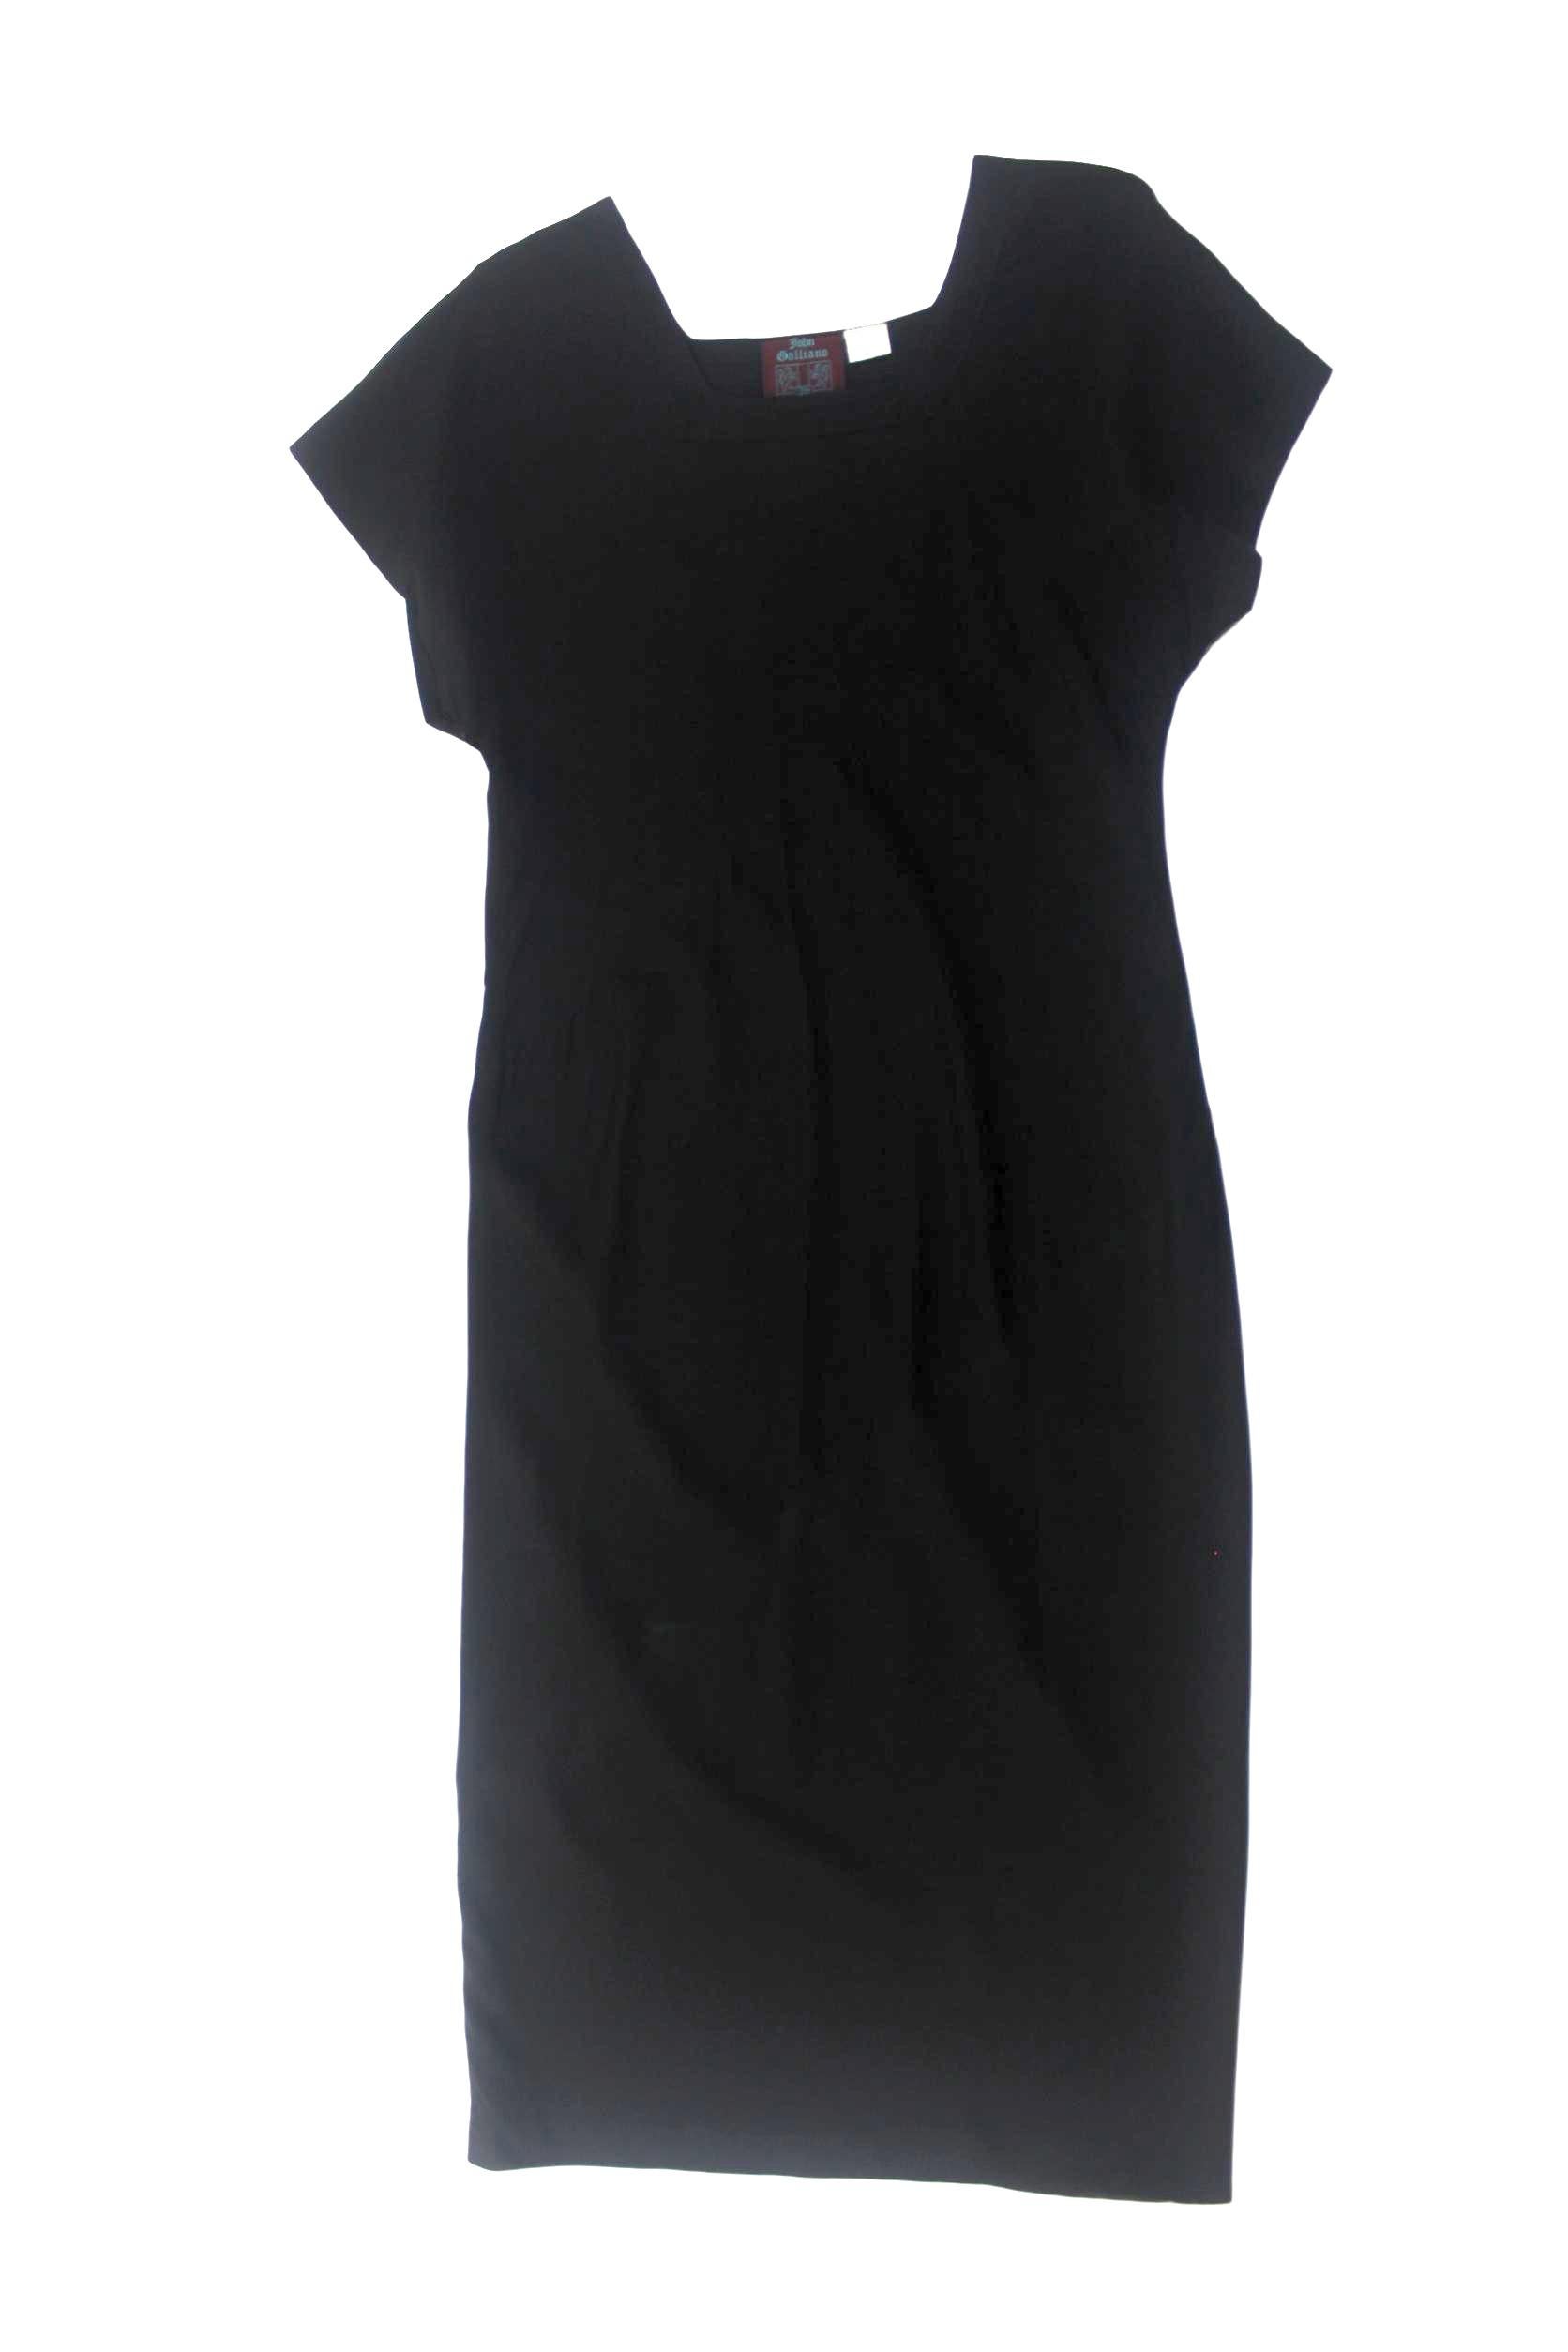 John Galliano Black Bias Cut Silk Dress Made in England Label For Sale 6